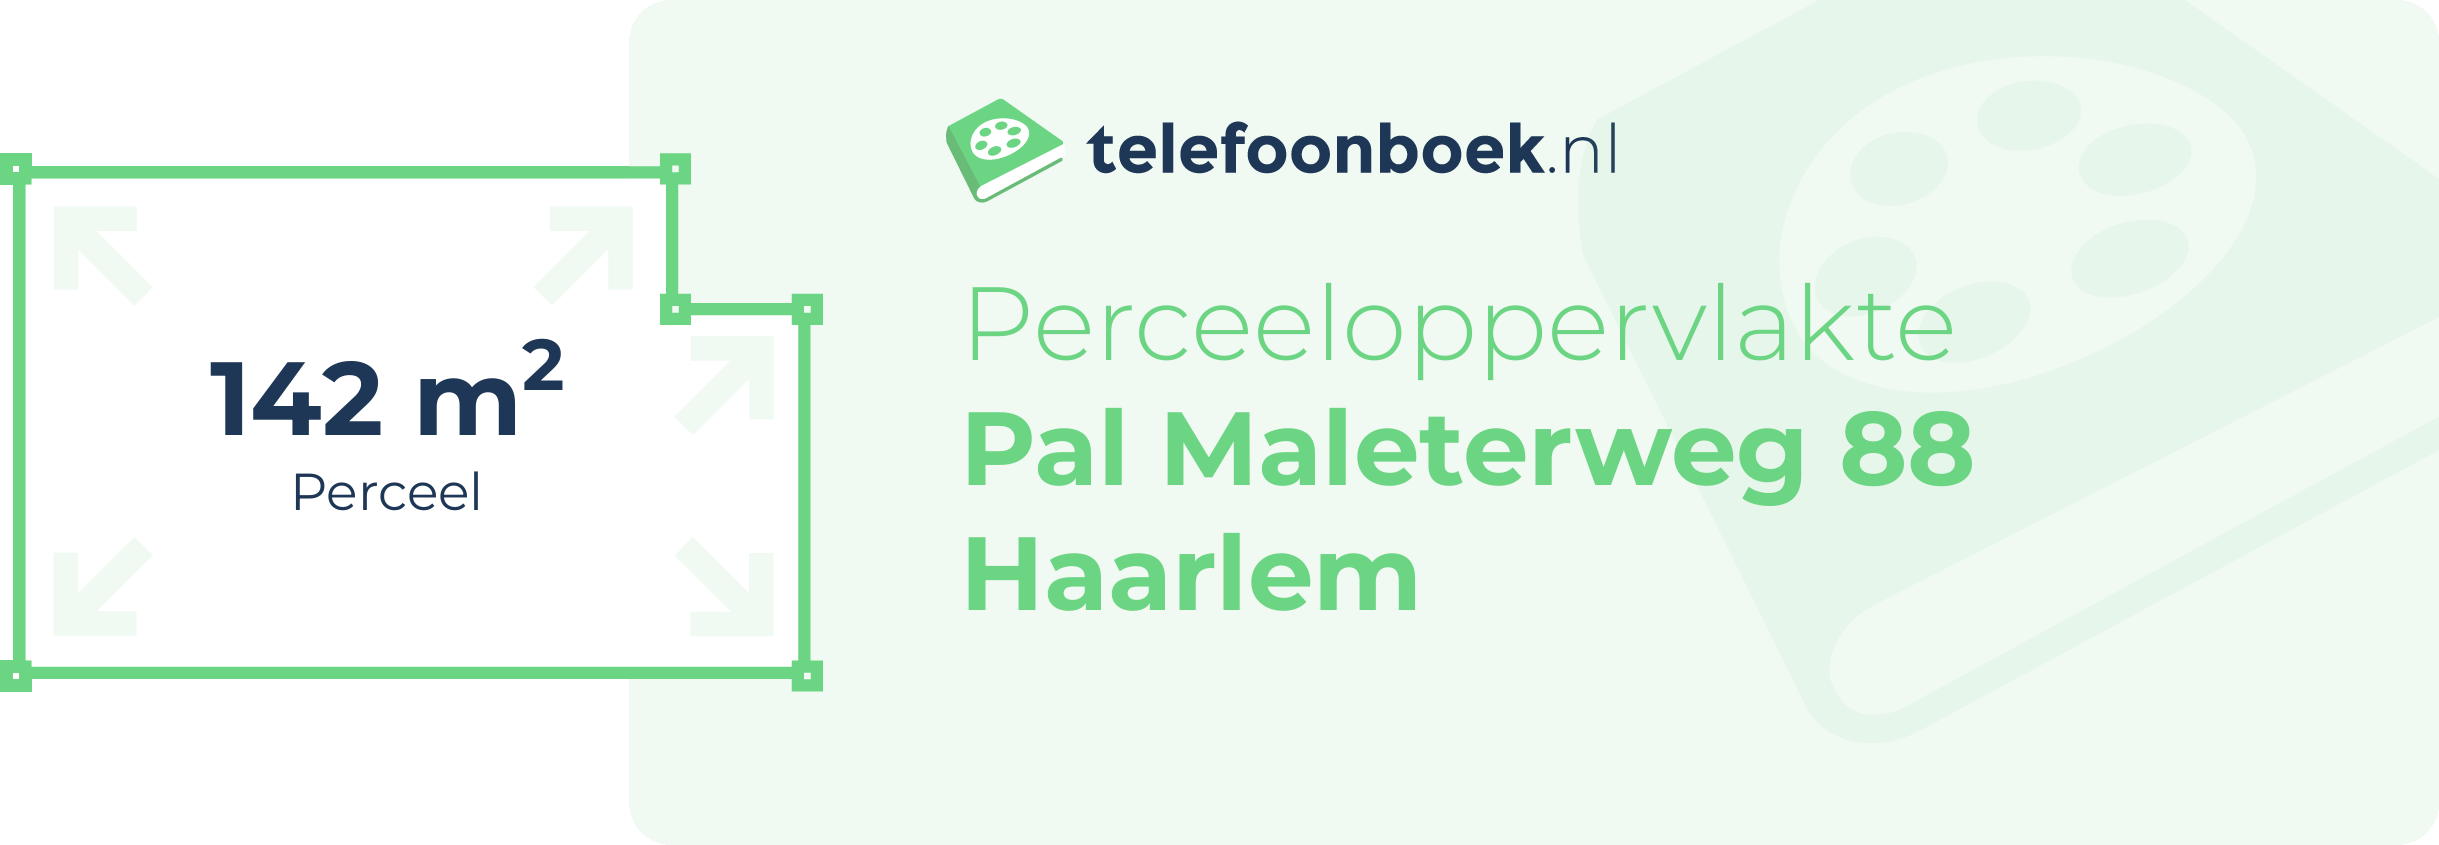 Perceeloppervlakte Pal Maleterweg 88 Haarlem